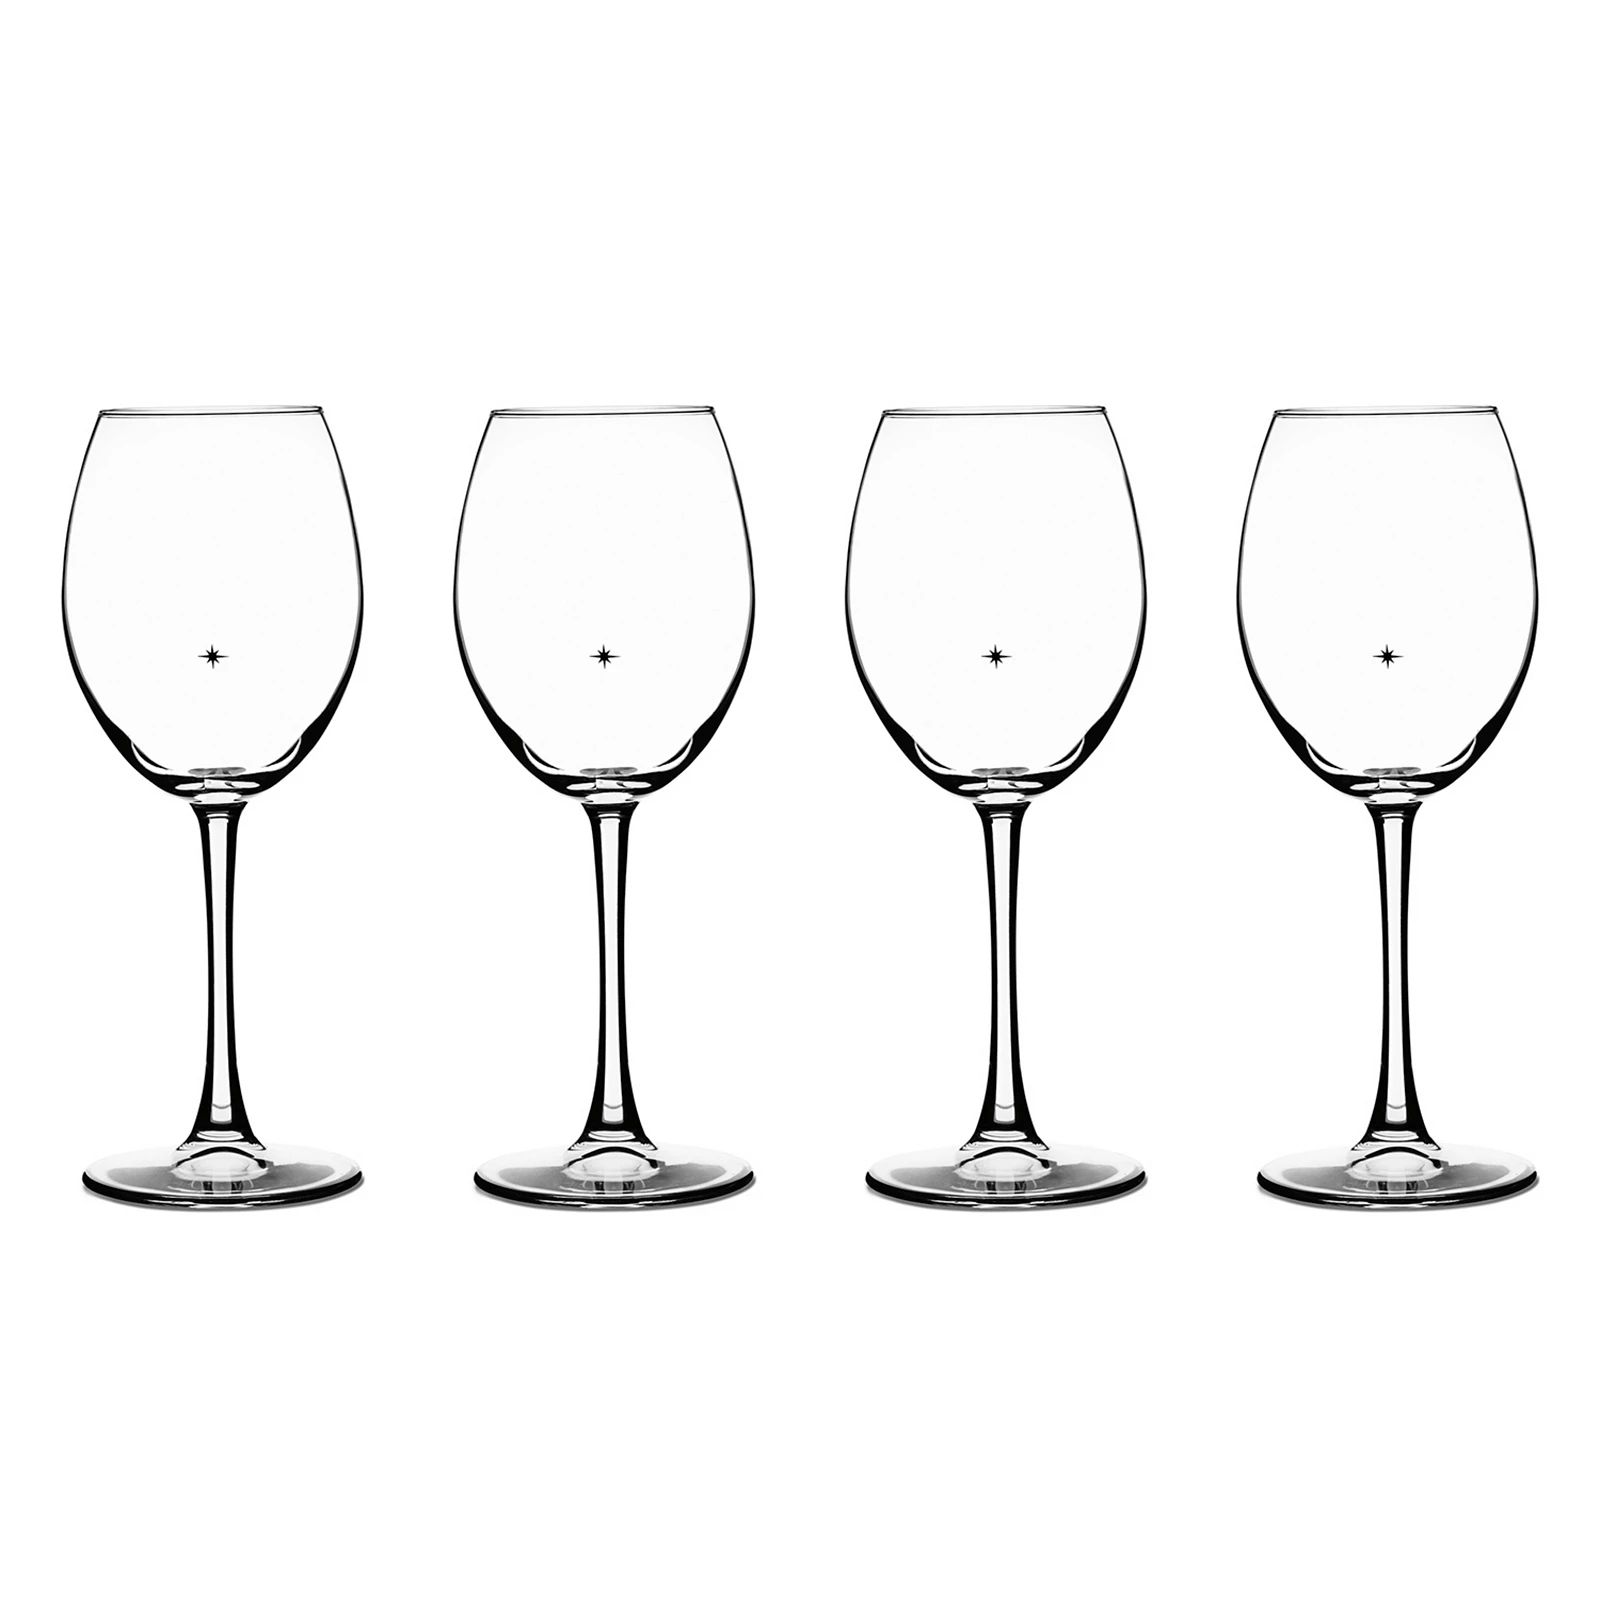 Cuisinart The Star's The Limit 4-pc. White Wine Glass Set | Kohl's